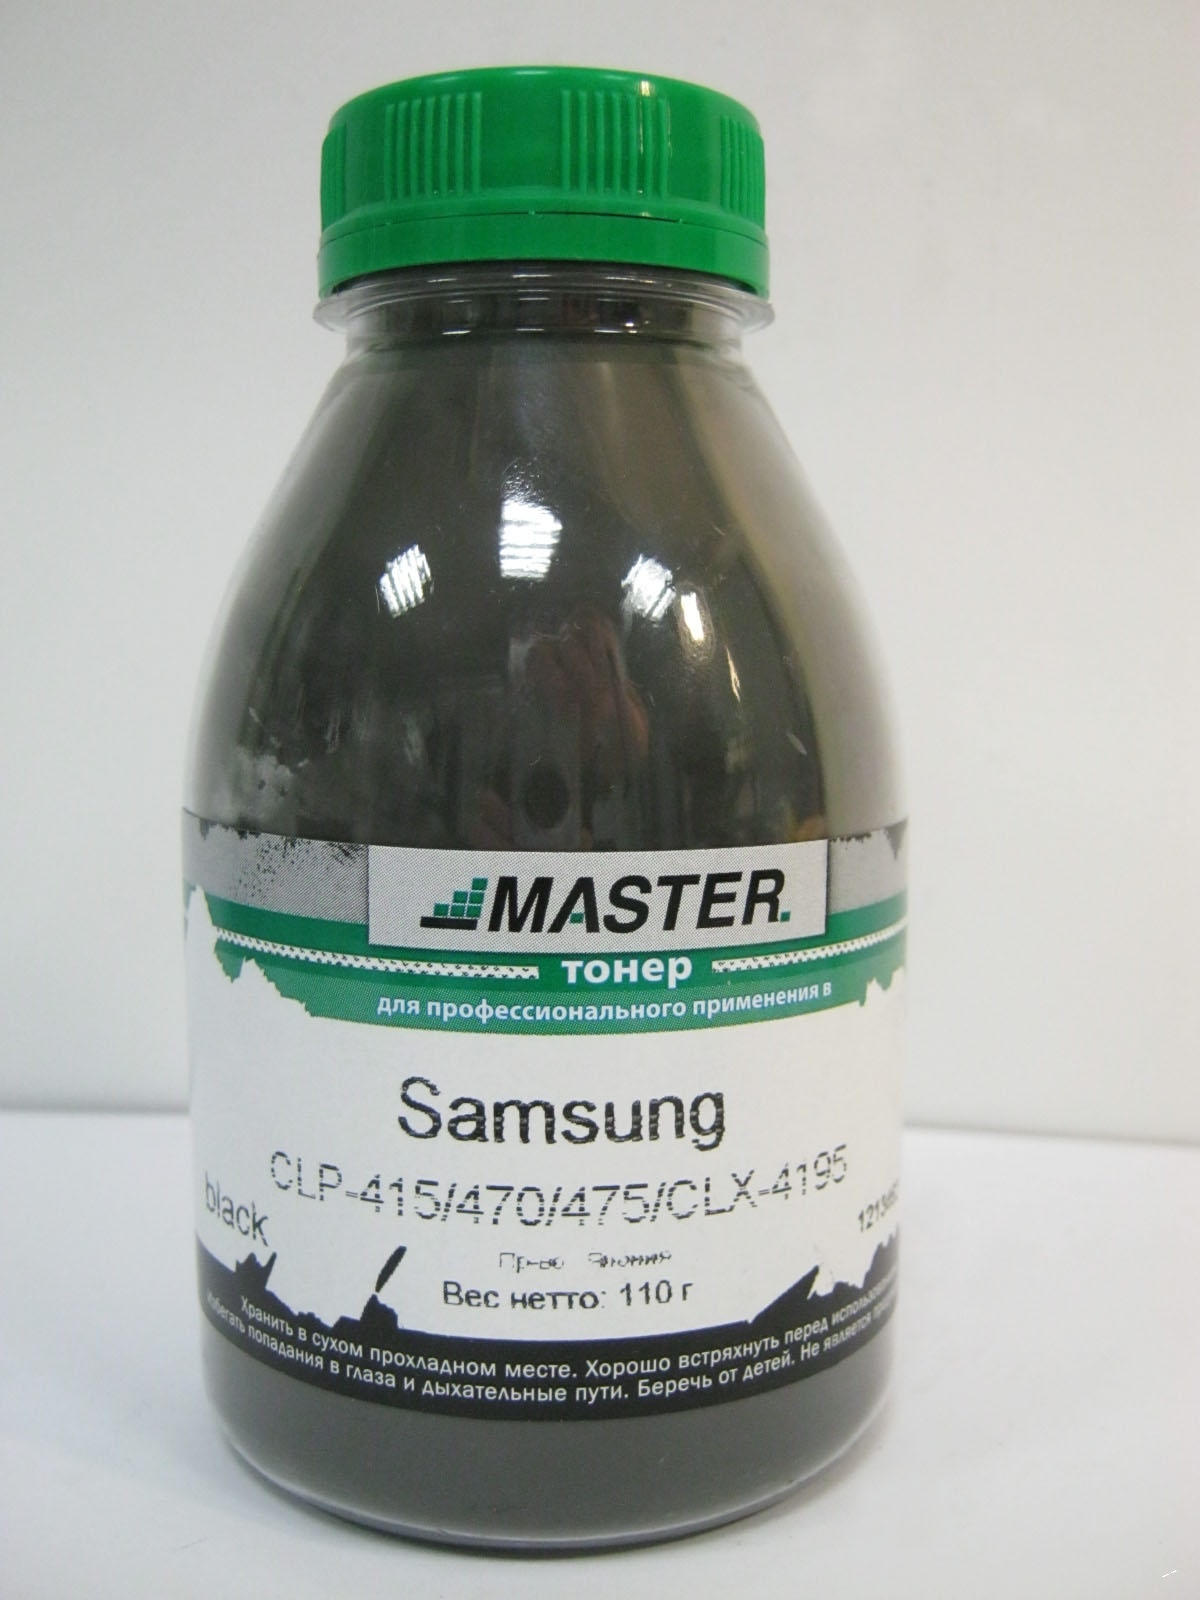 Тонер Samsung CLP-415/470/475/CLX-4195/Xpress C1810W, black, 110г/банка, 2К